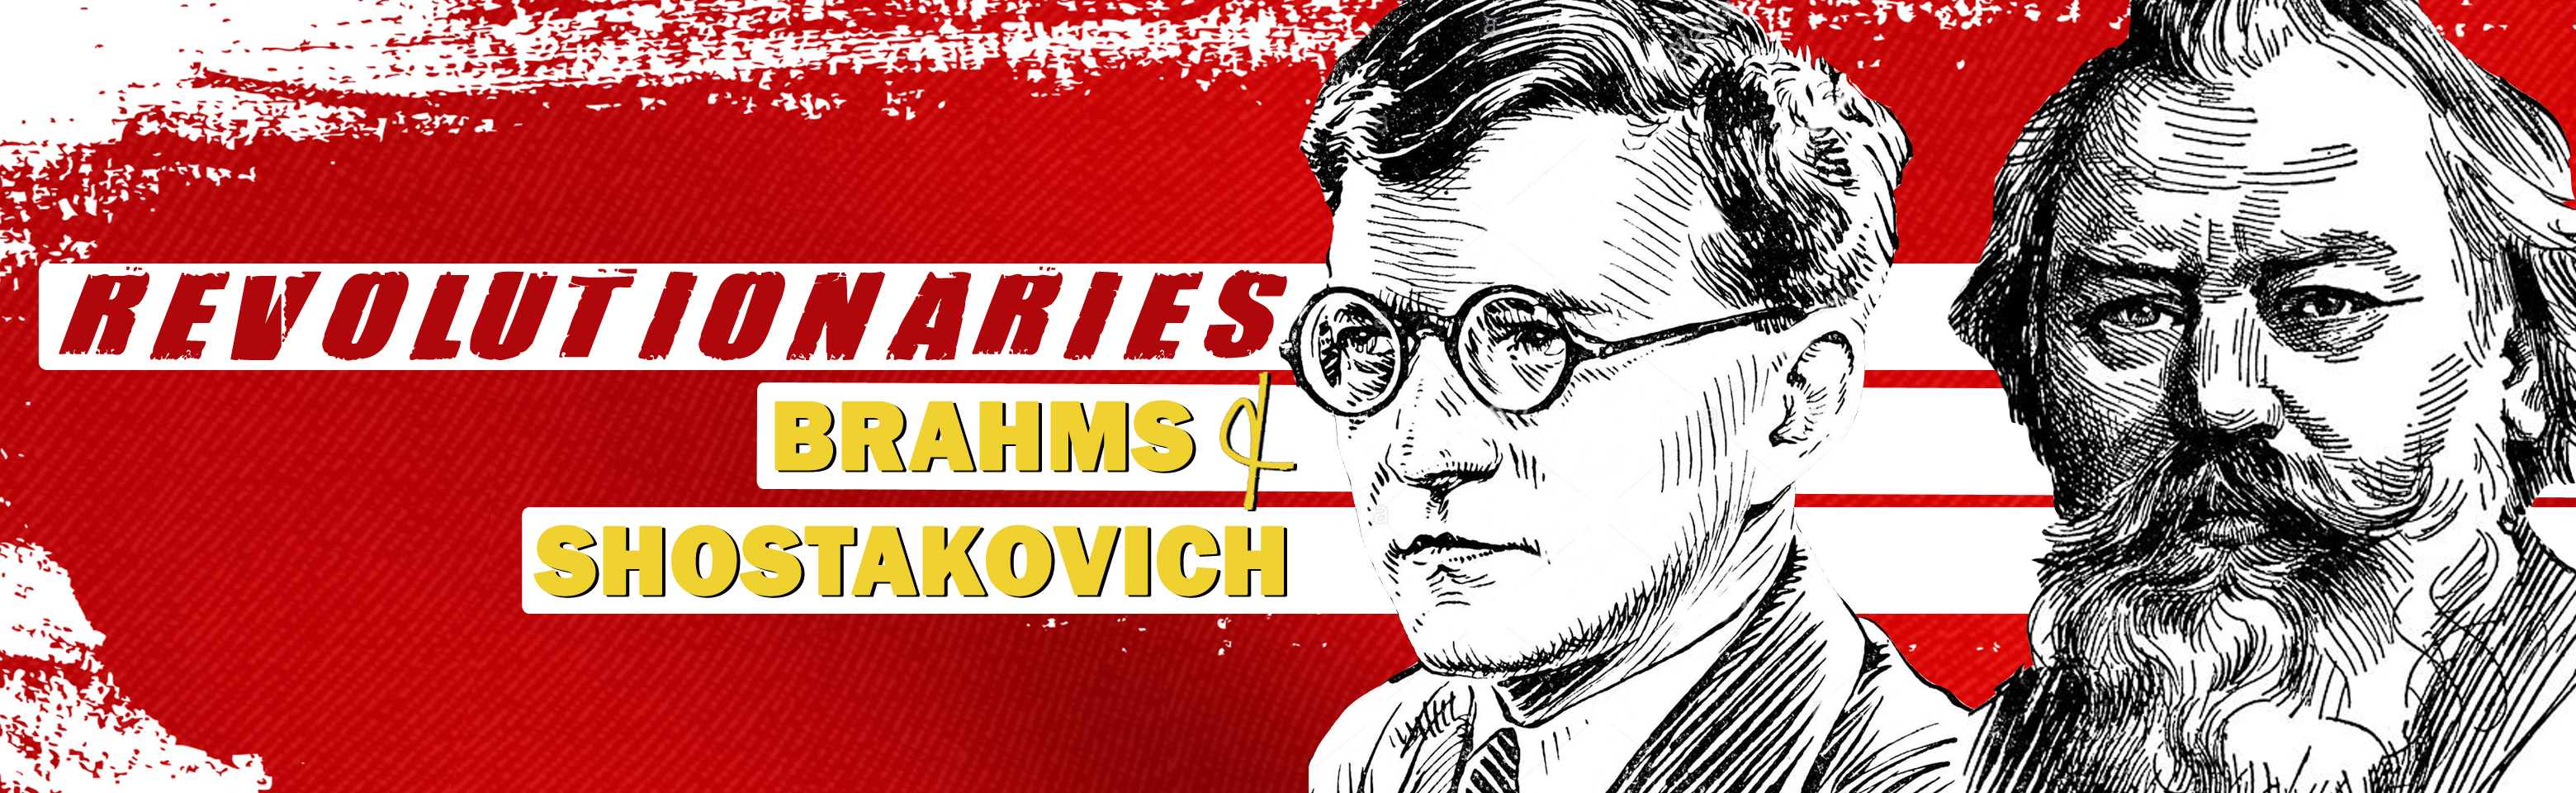 Revolutionaries: Brahms & Shostakovich